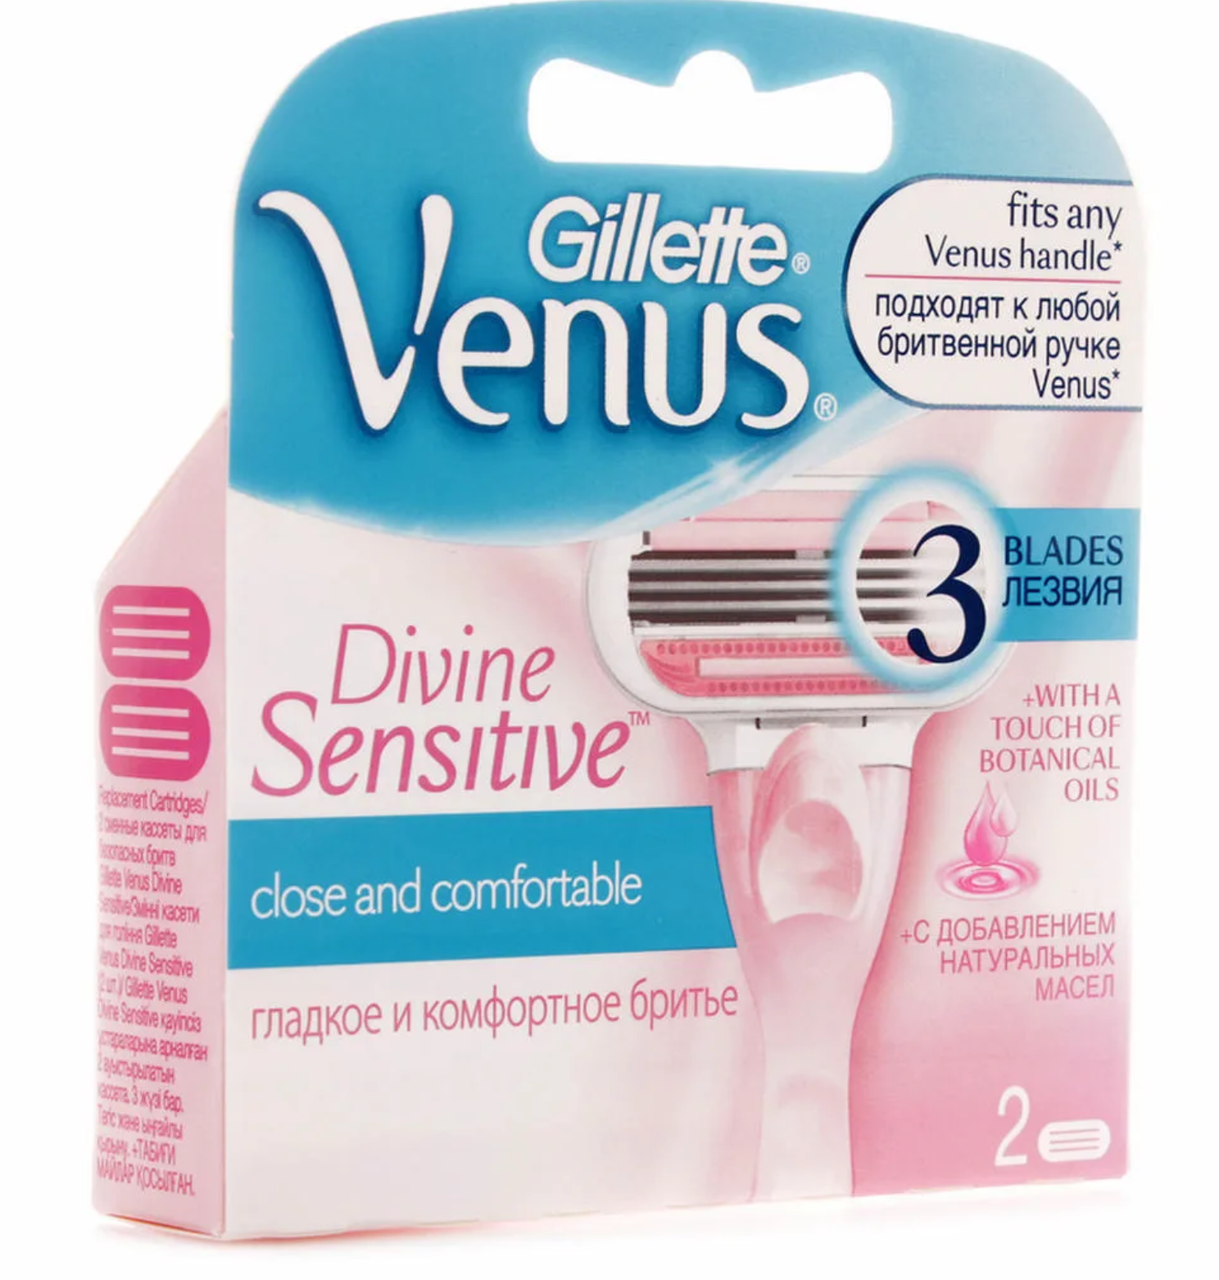 Сменные кассеты Gillette Venus Divine Sensitive ( 2 шт )